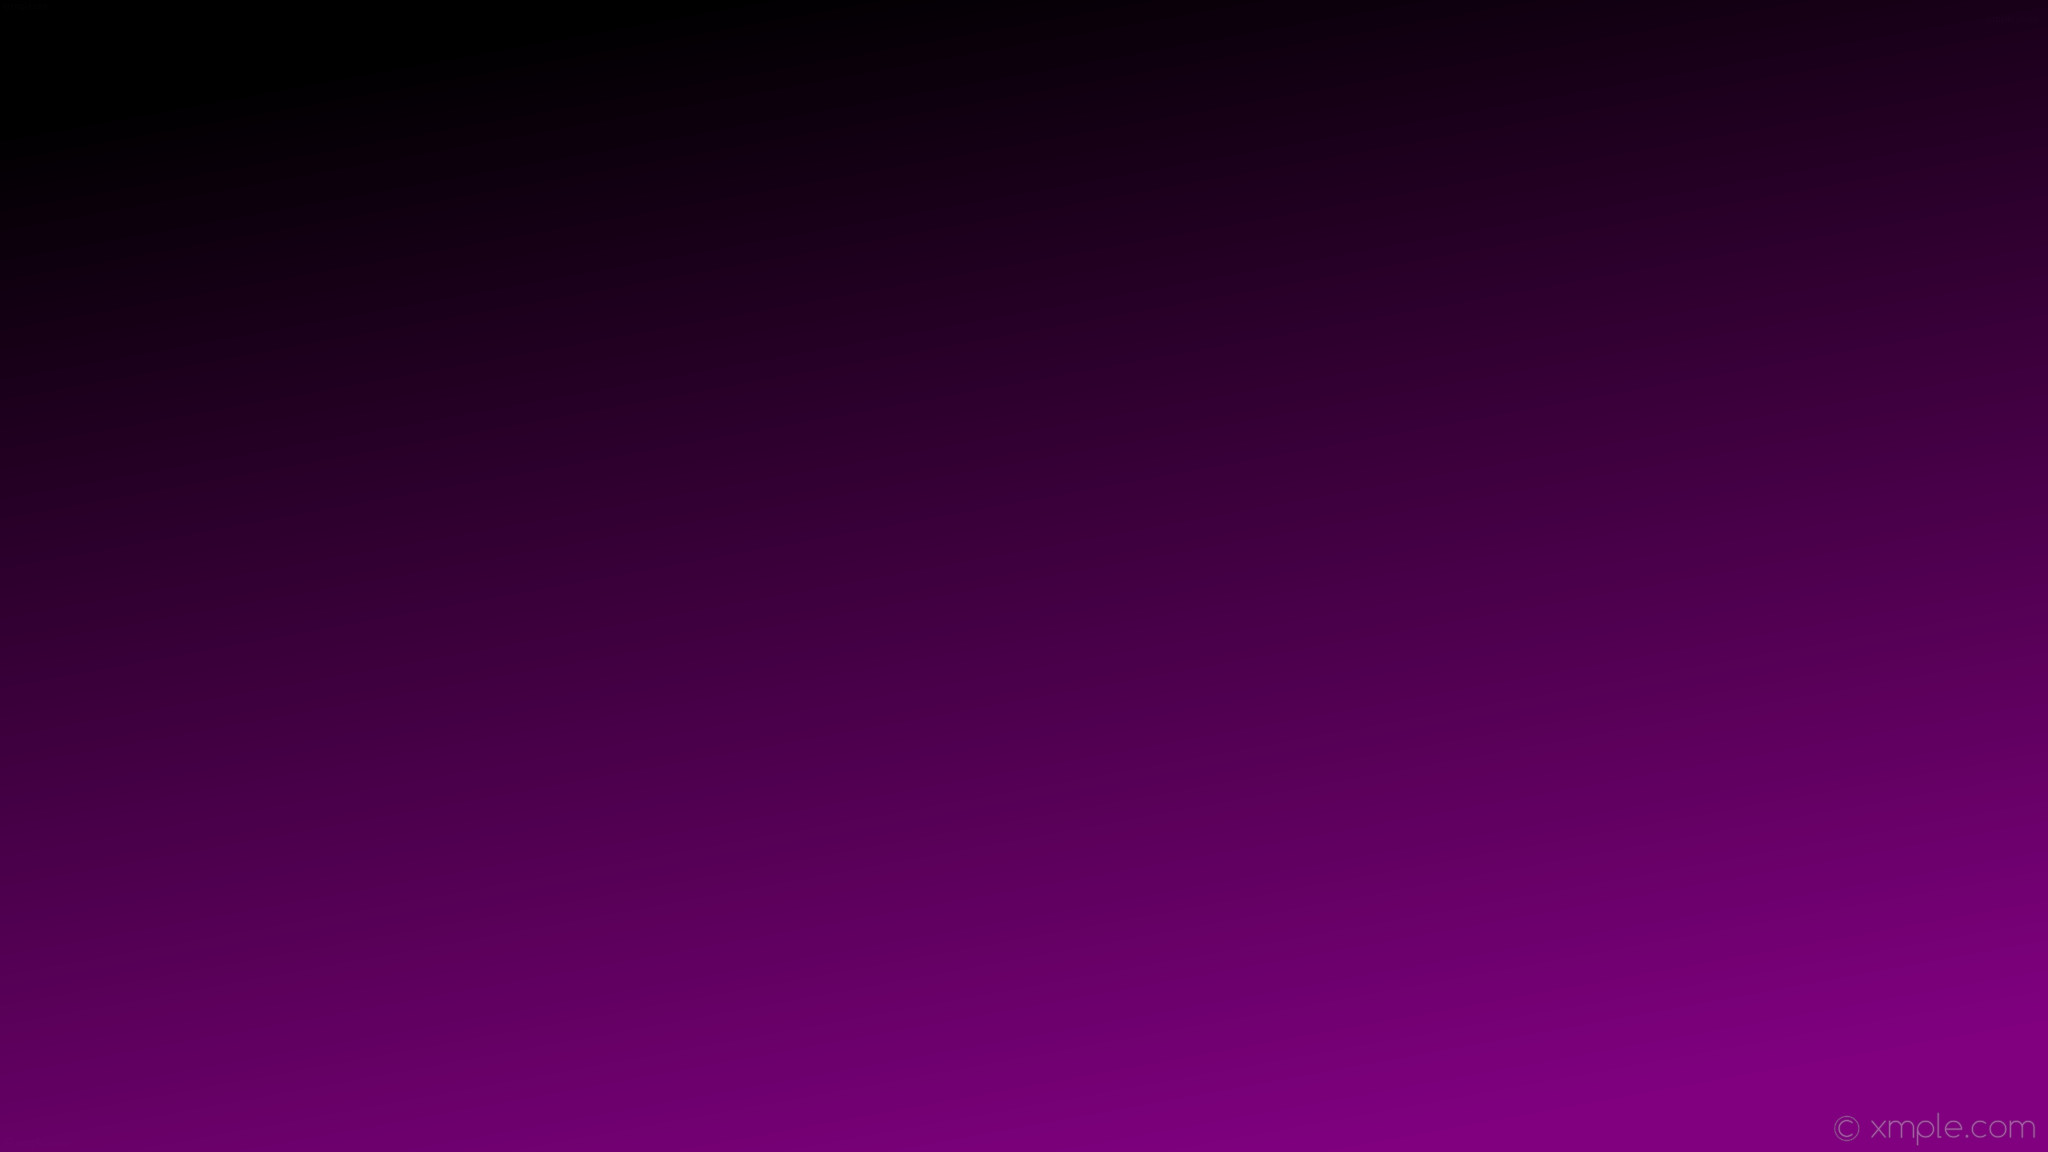 2048x1152 wallpaper gradient black purple linear #800080 #000000 300Â°